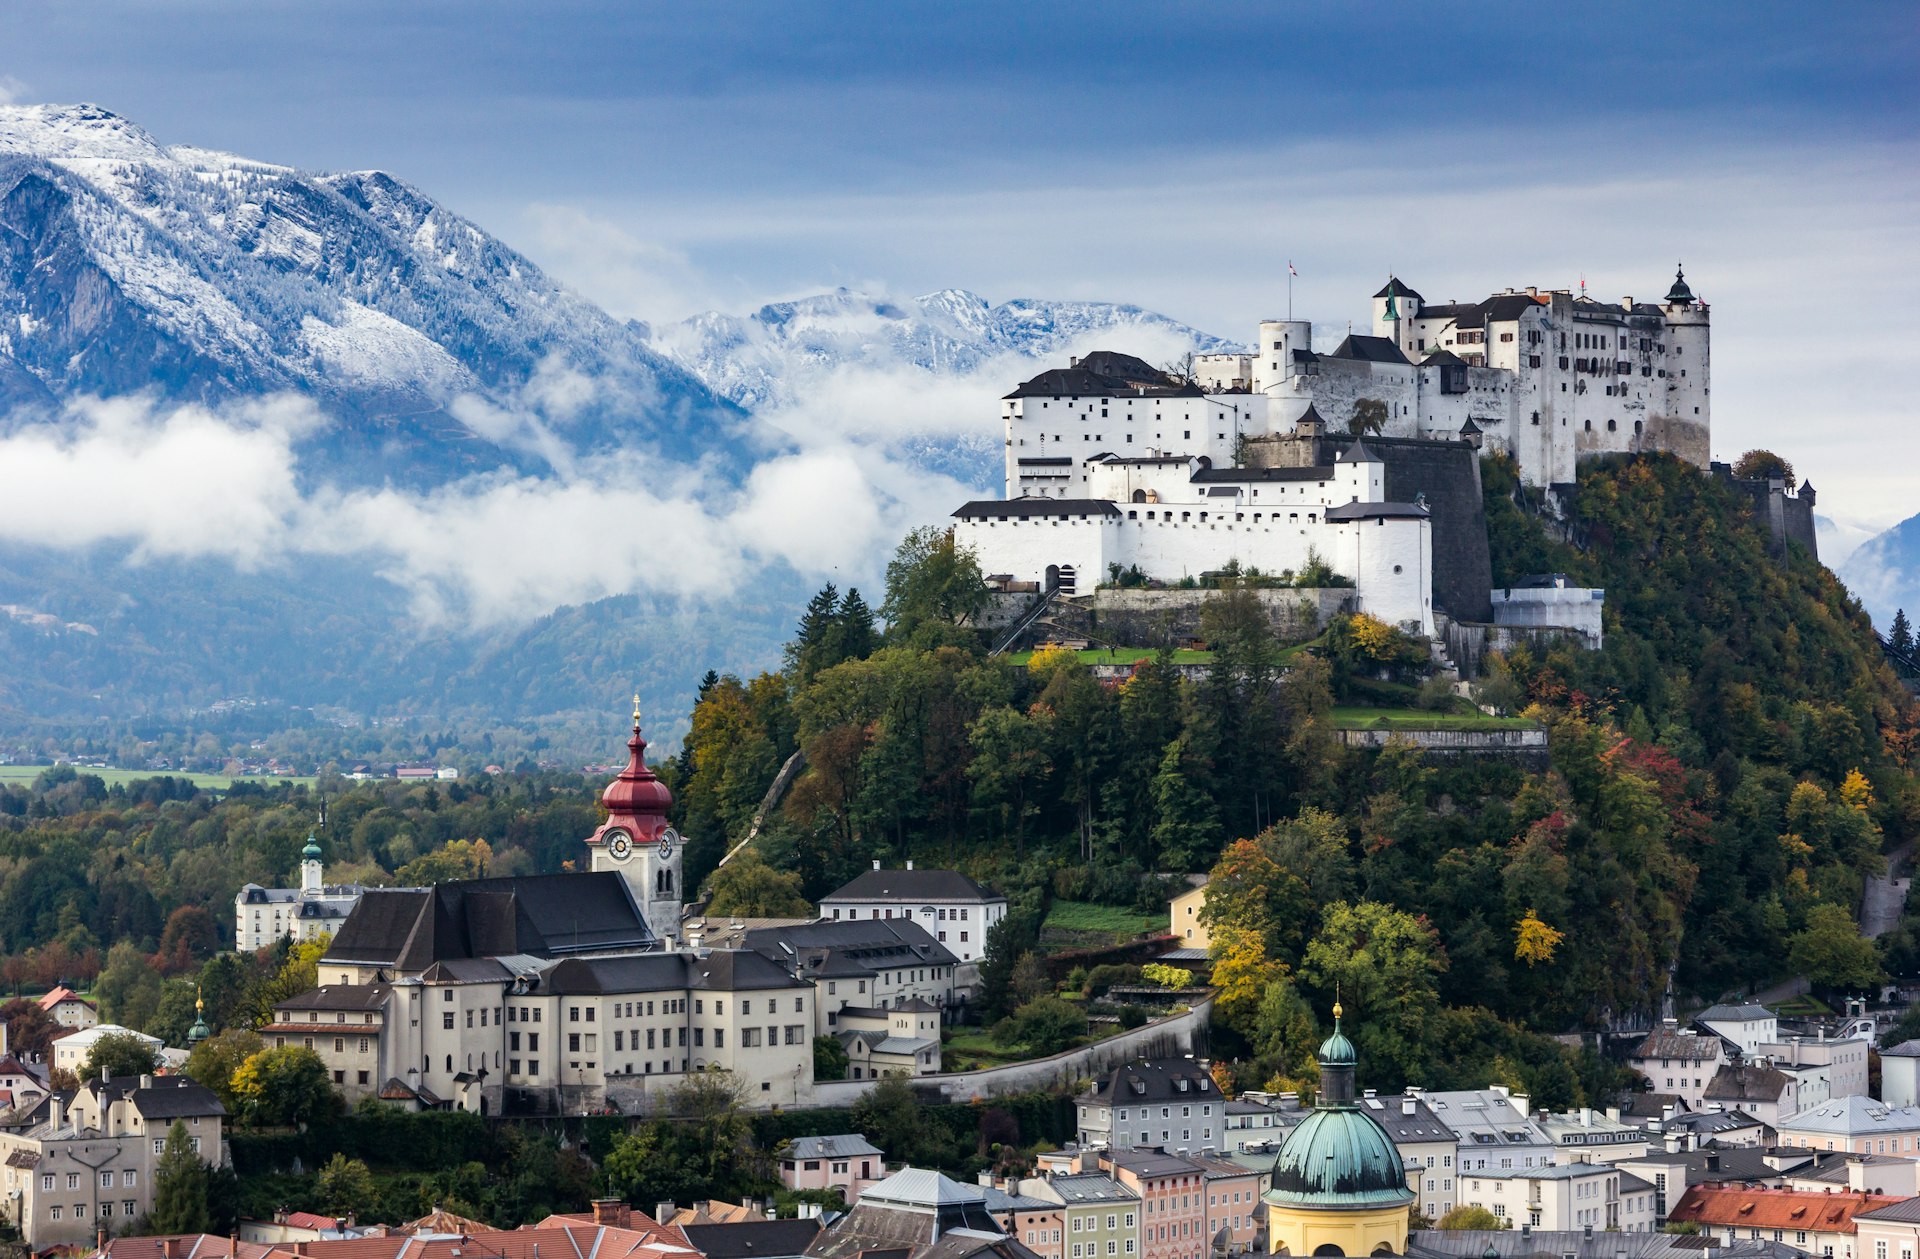 Festung Hohensalzburg, Salzburg, Austria